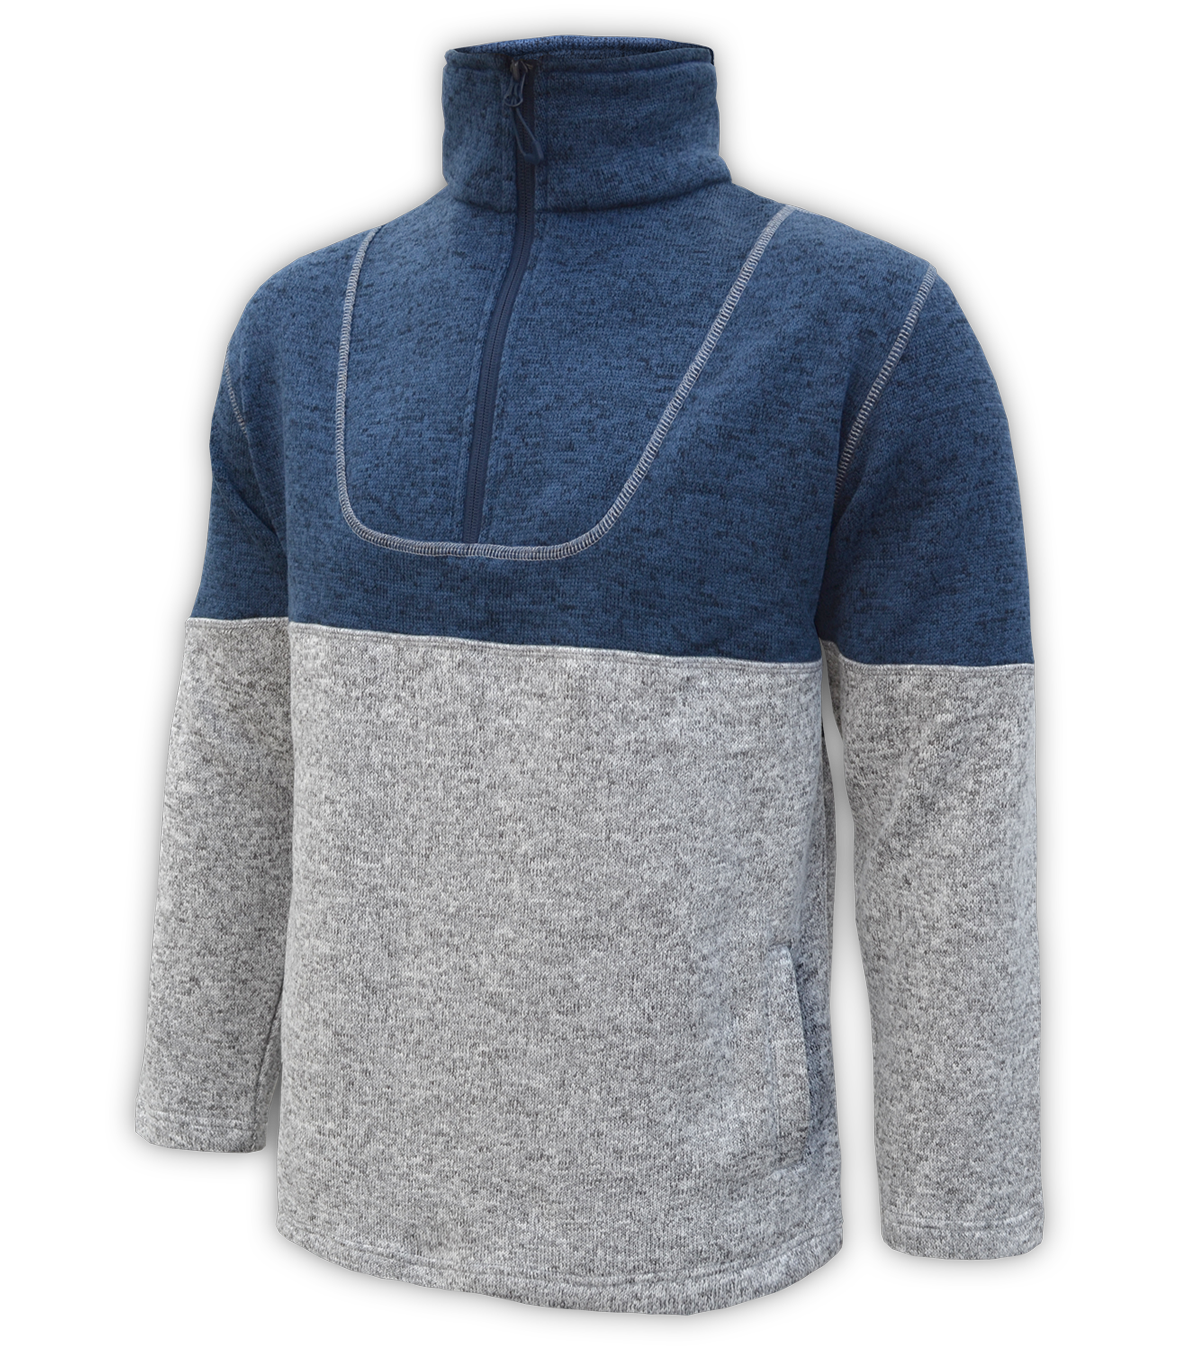 Renegade-mens-half-zip-fleece-pullover-north-shore-salt-and-pepper-gray-denim-blue-soft-two-tone